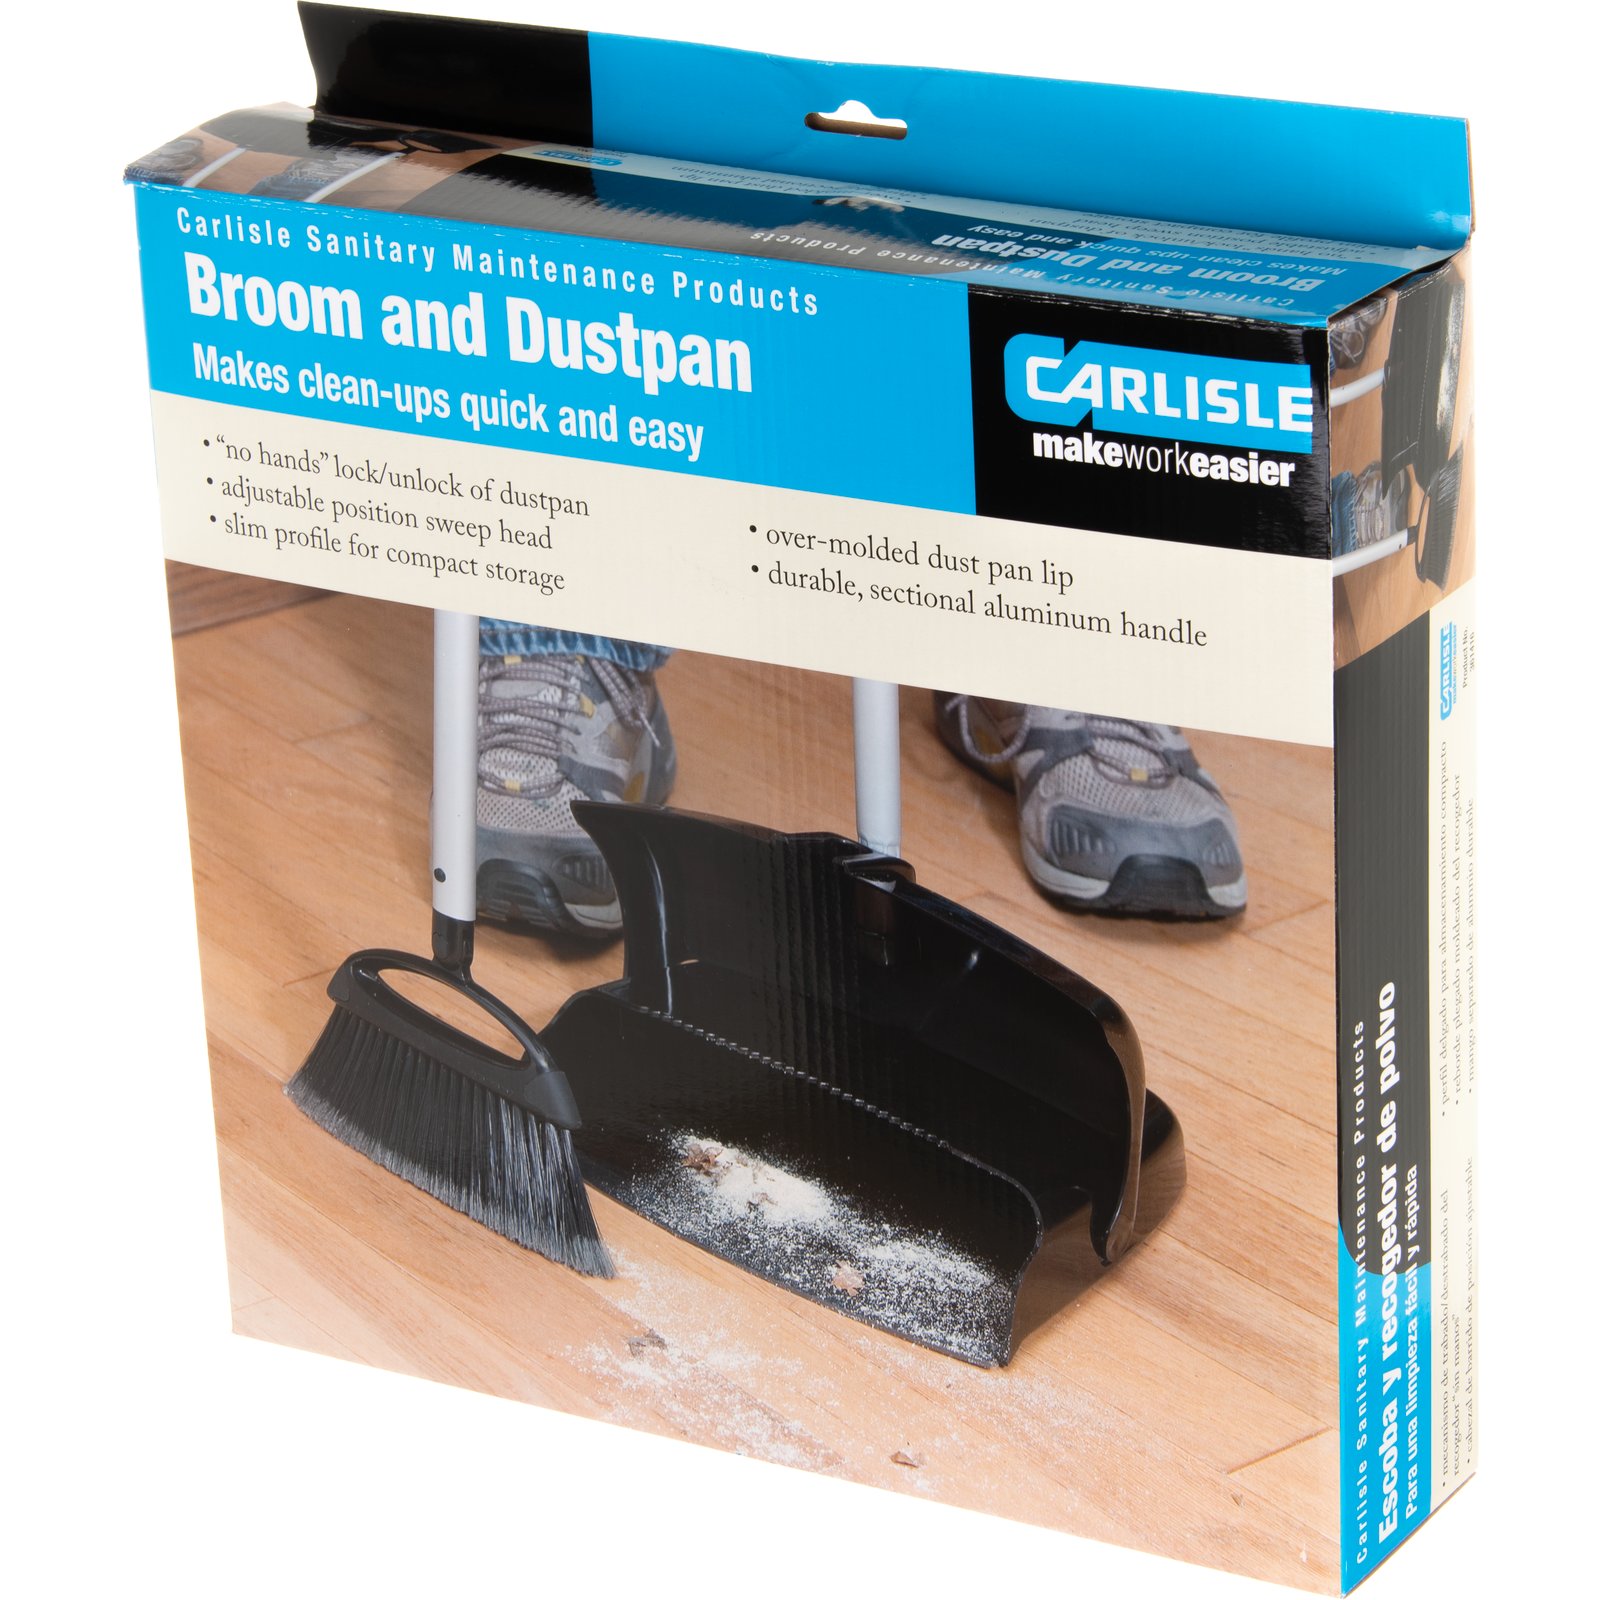 Carlisle Duo-Pan 36141503 36 Broom and Upright Dustpan